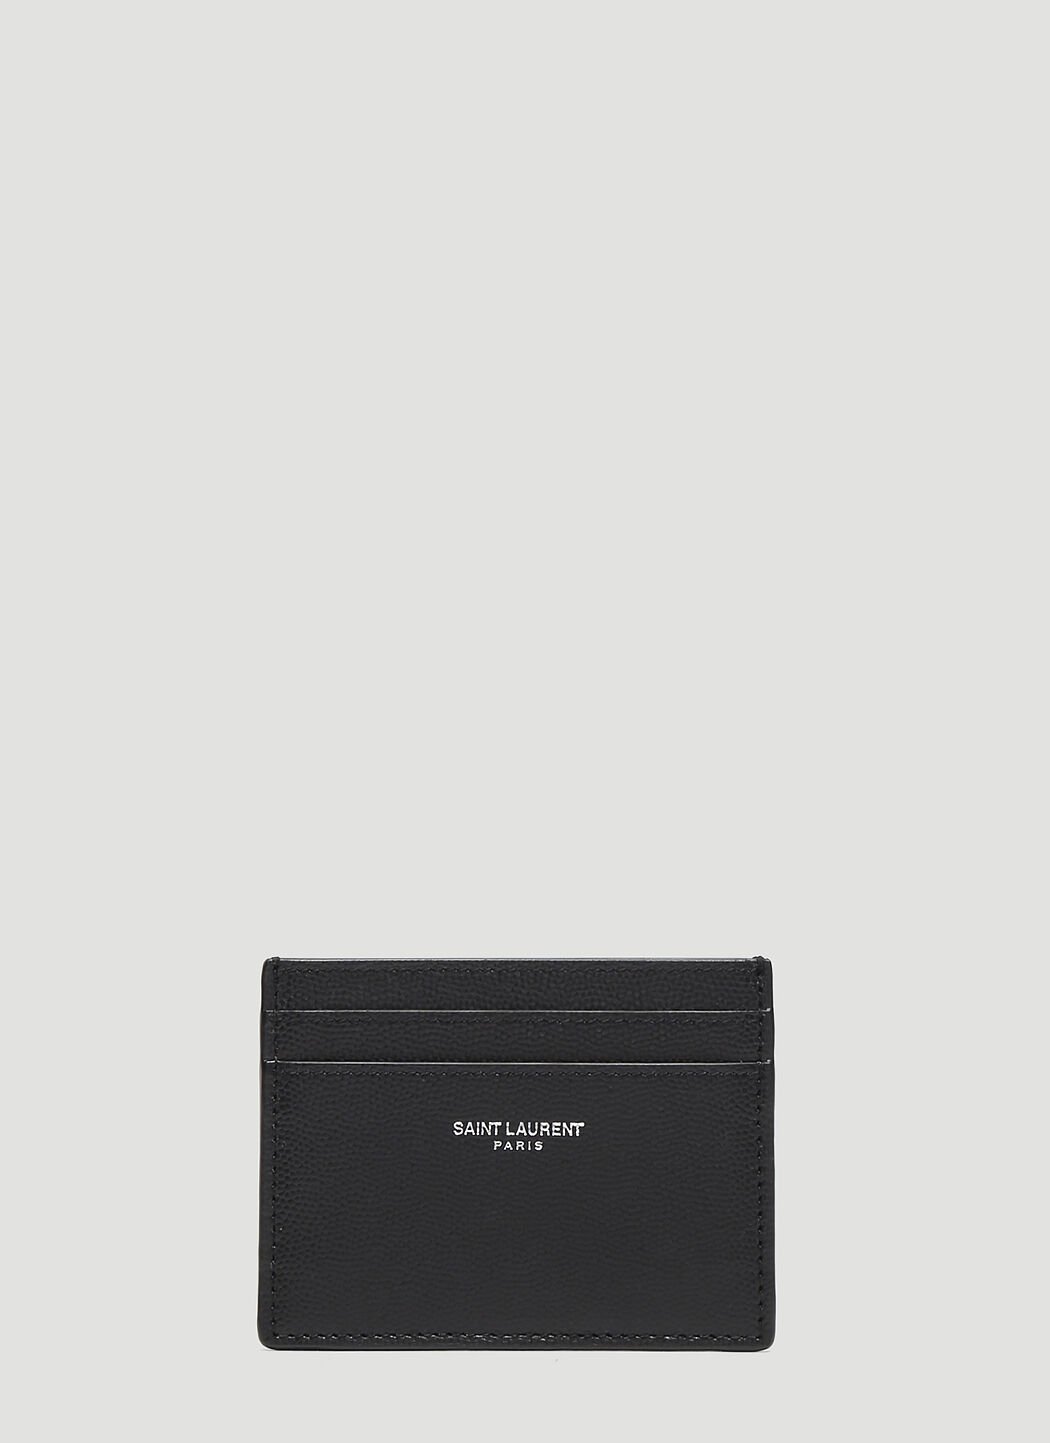 Saint Laurent New York Card Case Black sla0136039